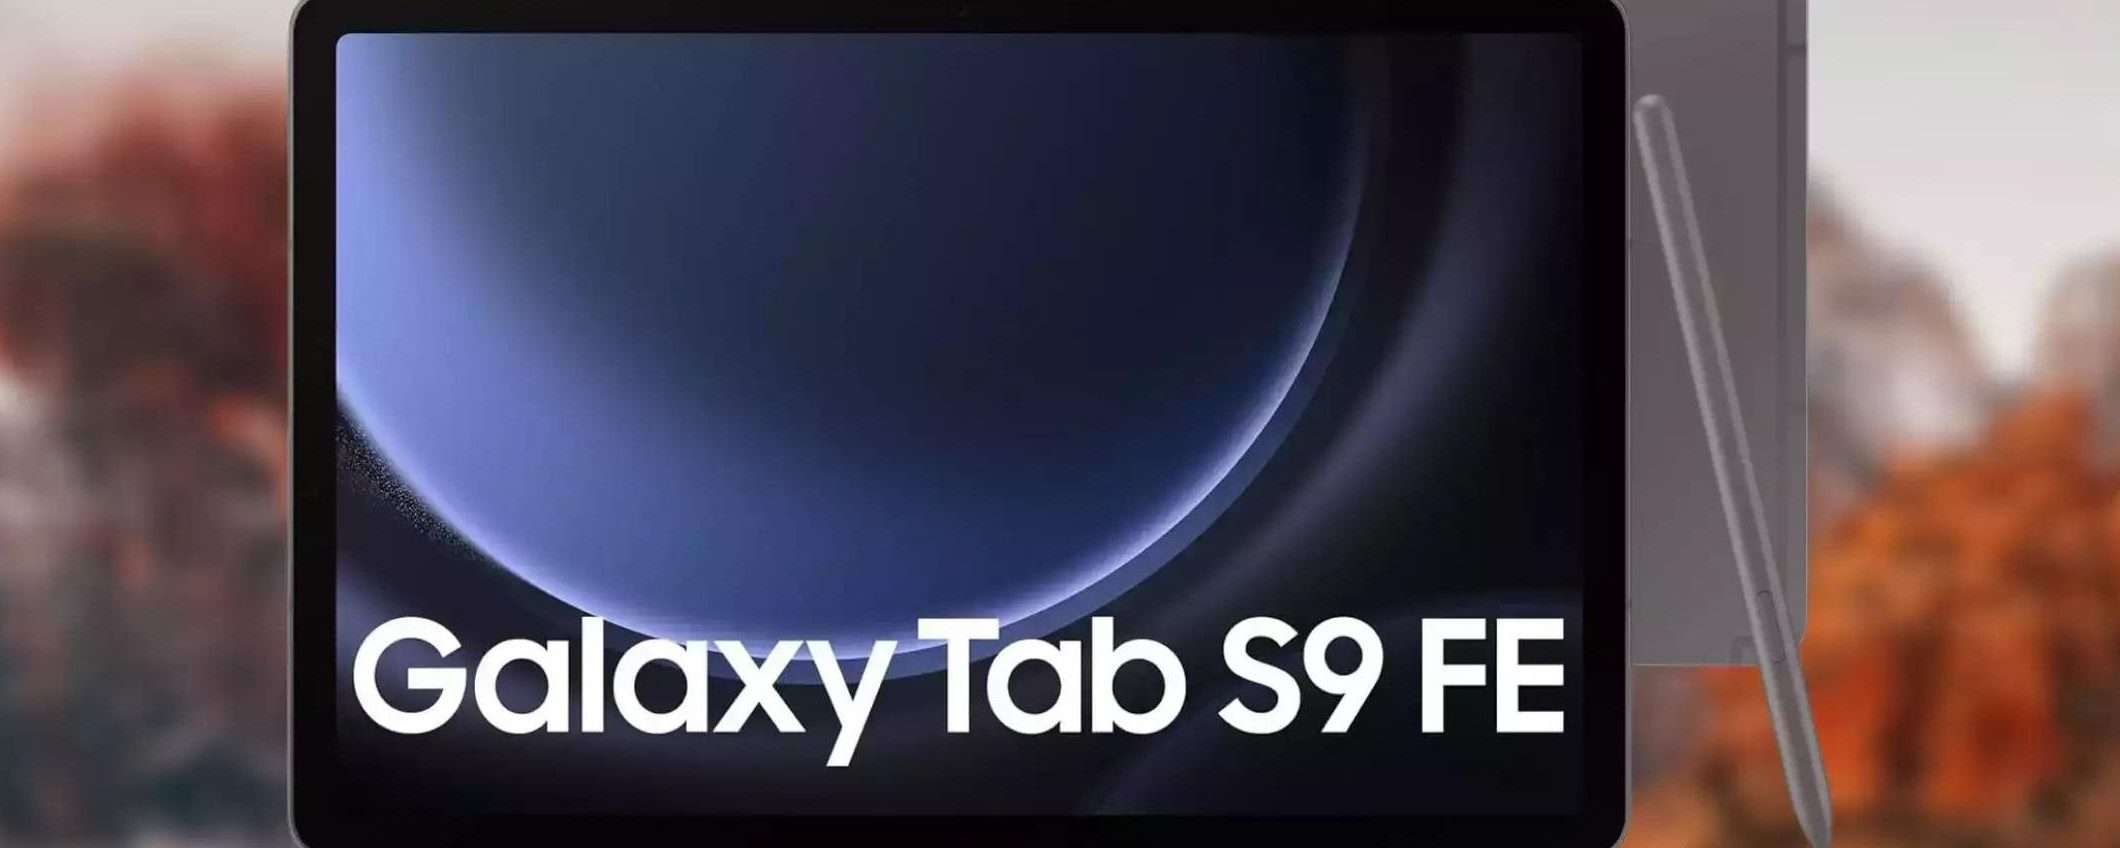 Samsung Galaxy Tab S9 FE: sconto FOLLE del 37% su Amazon, consegna GRATUITA